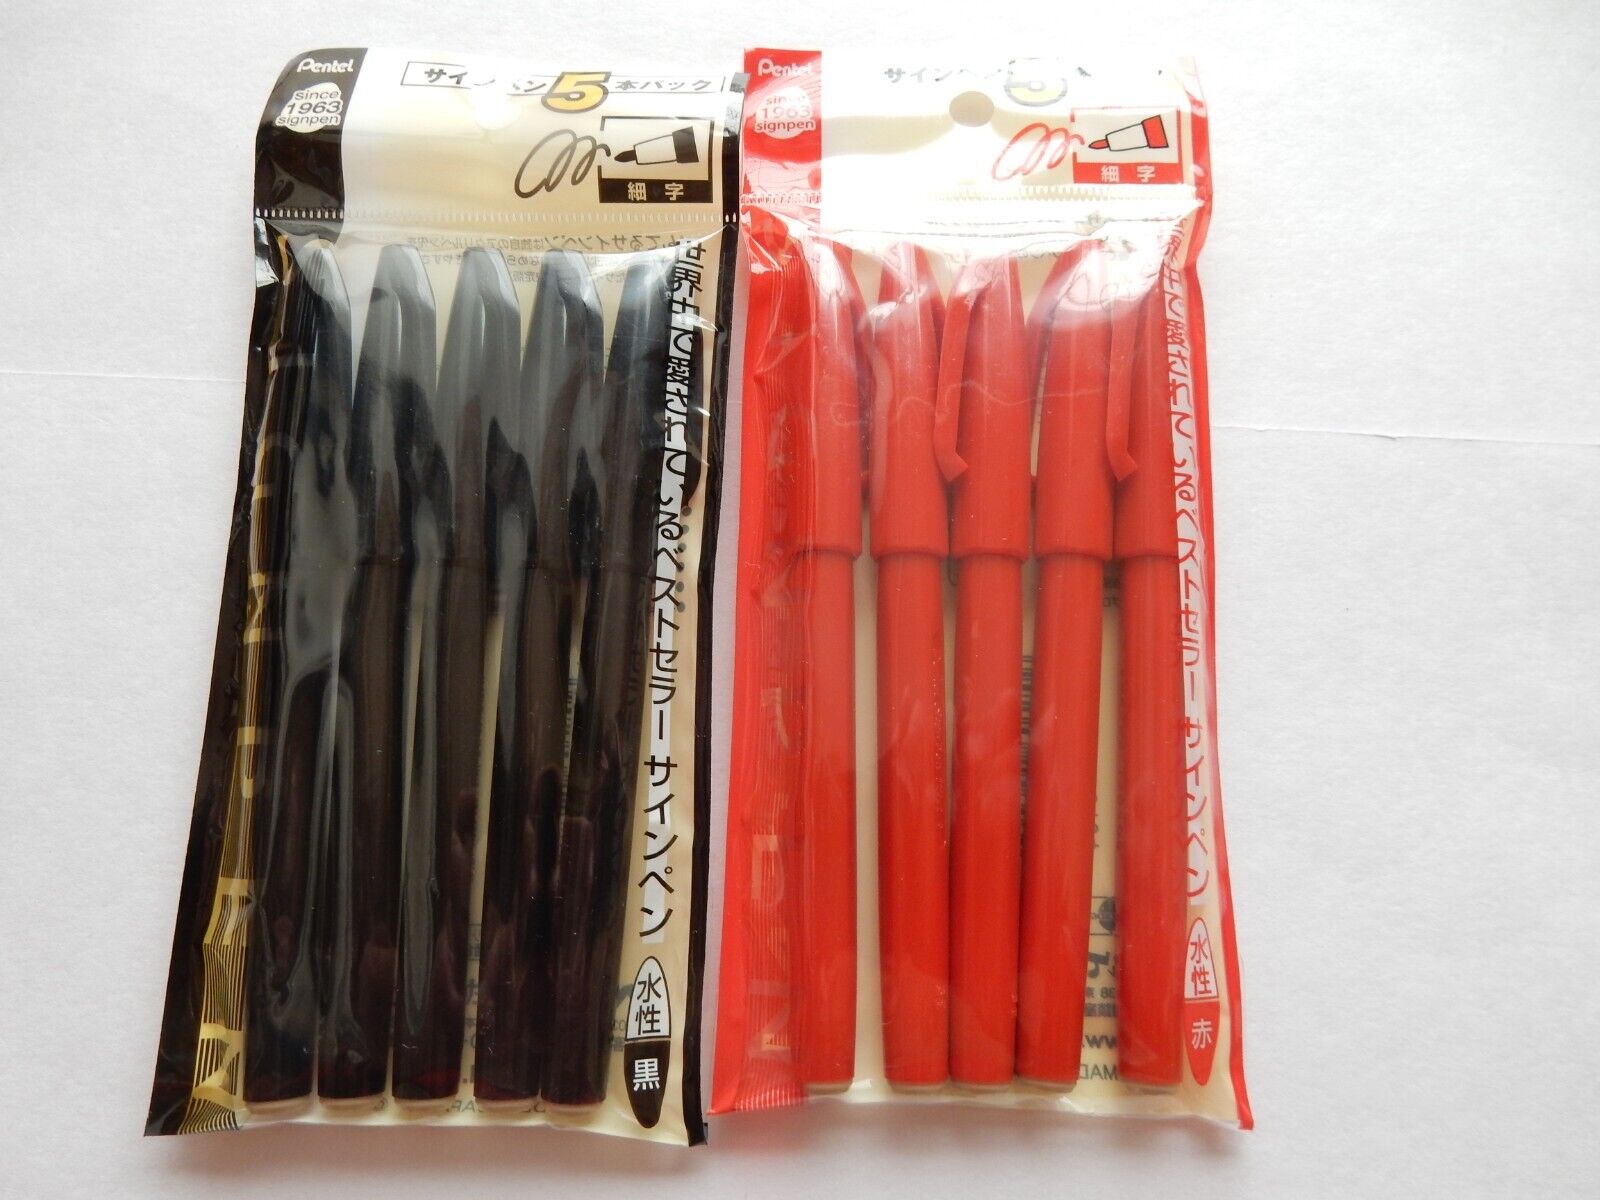 Pentel felt-tip pen, black and red, 5 pack each, fine point, water-basedjapan